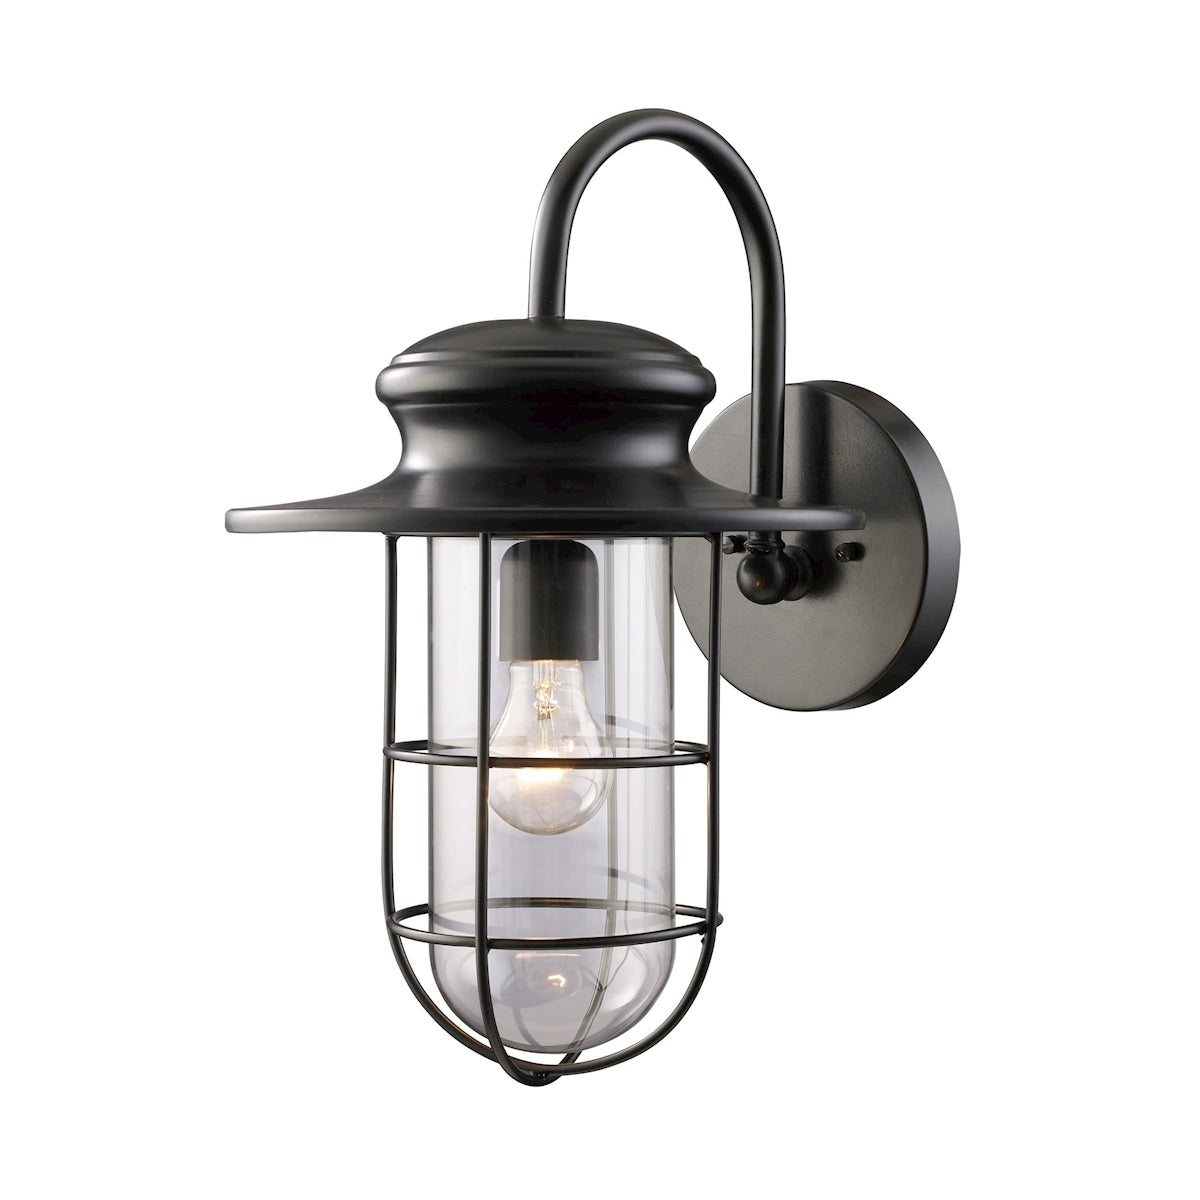 ELK Lighting 42285/1 Portside 1-Light Outdoor Wall Lamp in Matte Black